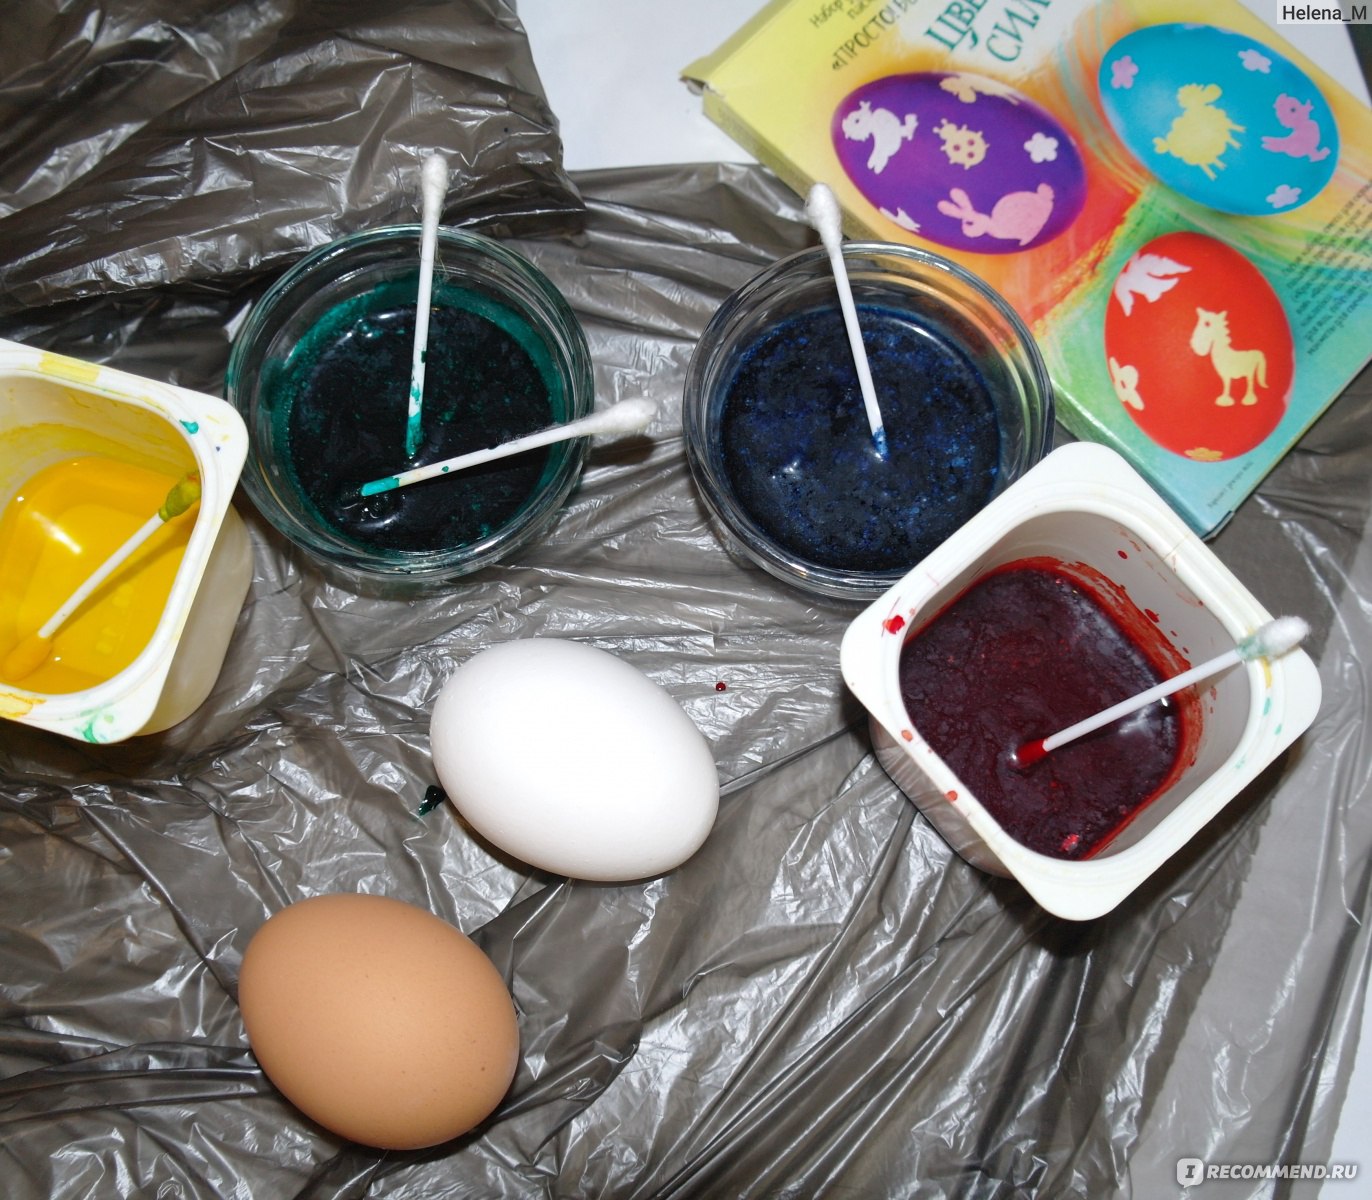 Яйца без красителей. Набор для окрашивания яиц. Красим яйца пищевыми красителями. Емкость для окрашивания яиц. Кирстки для покраски яиц.